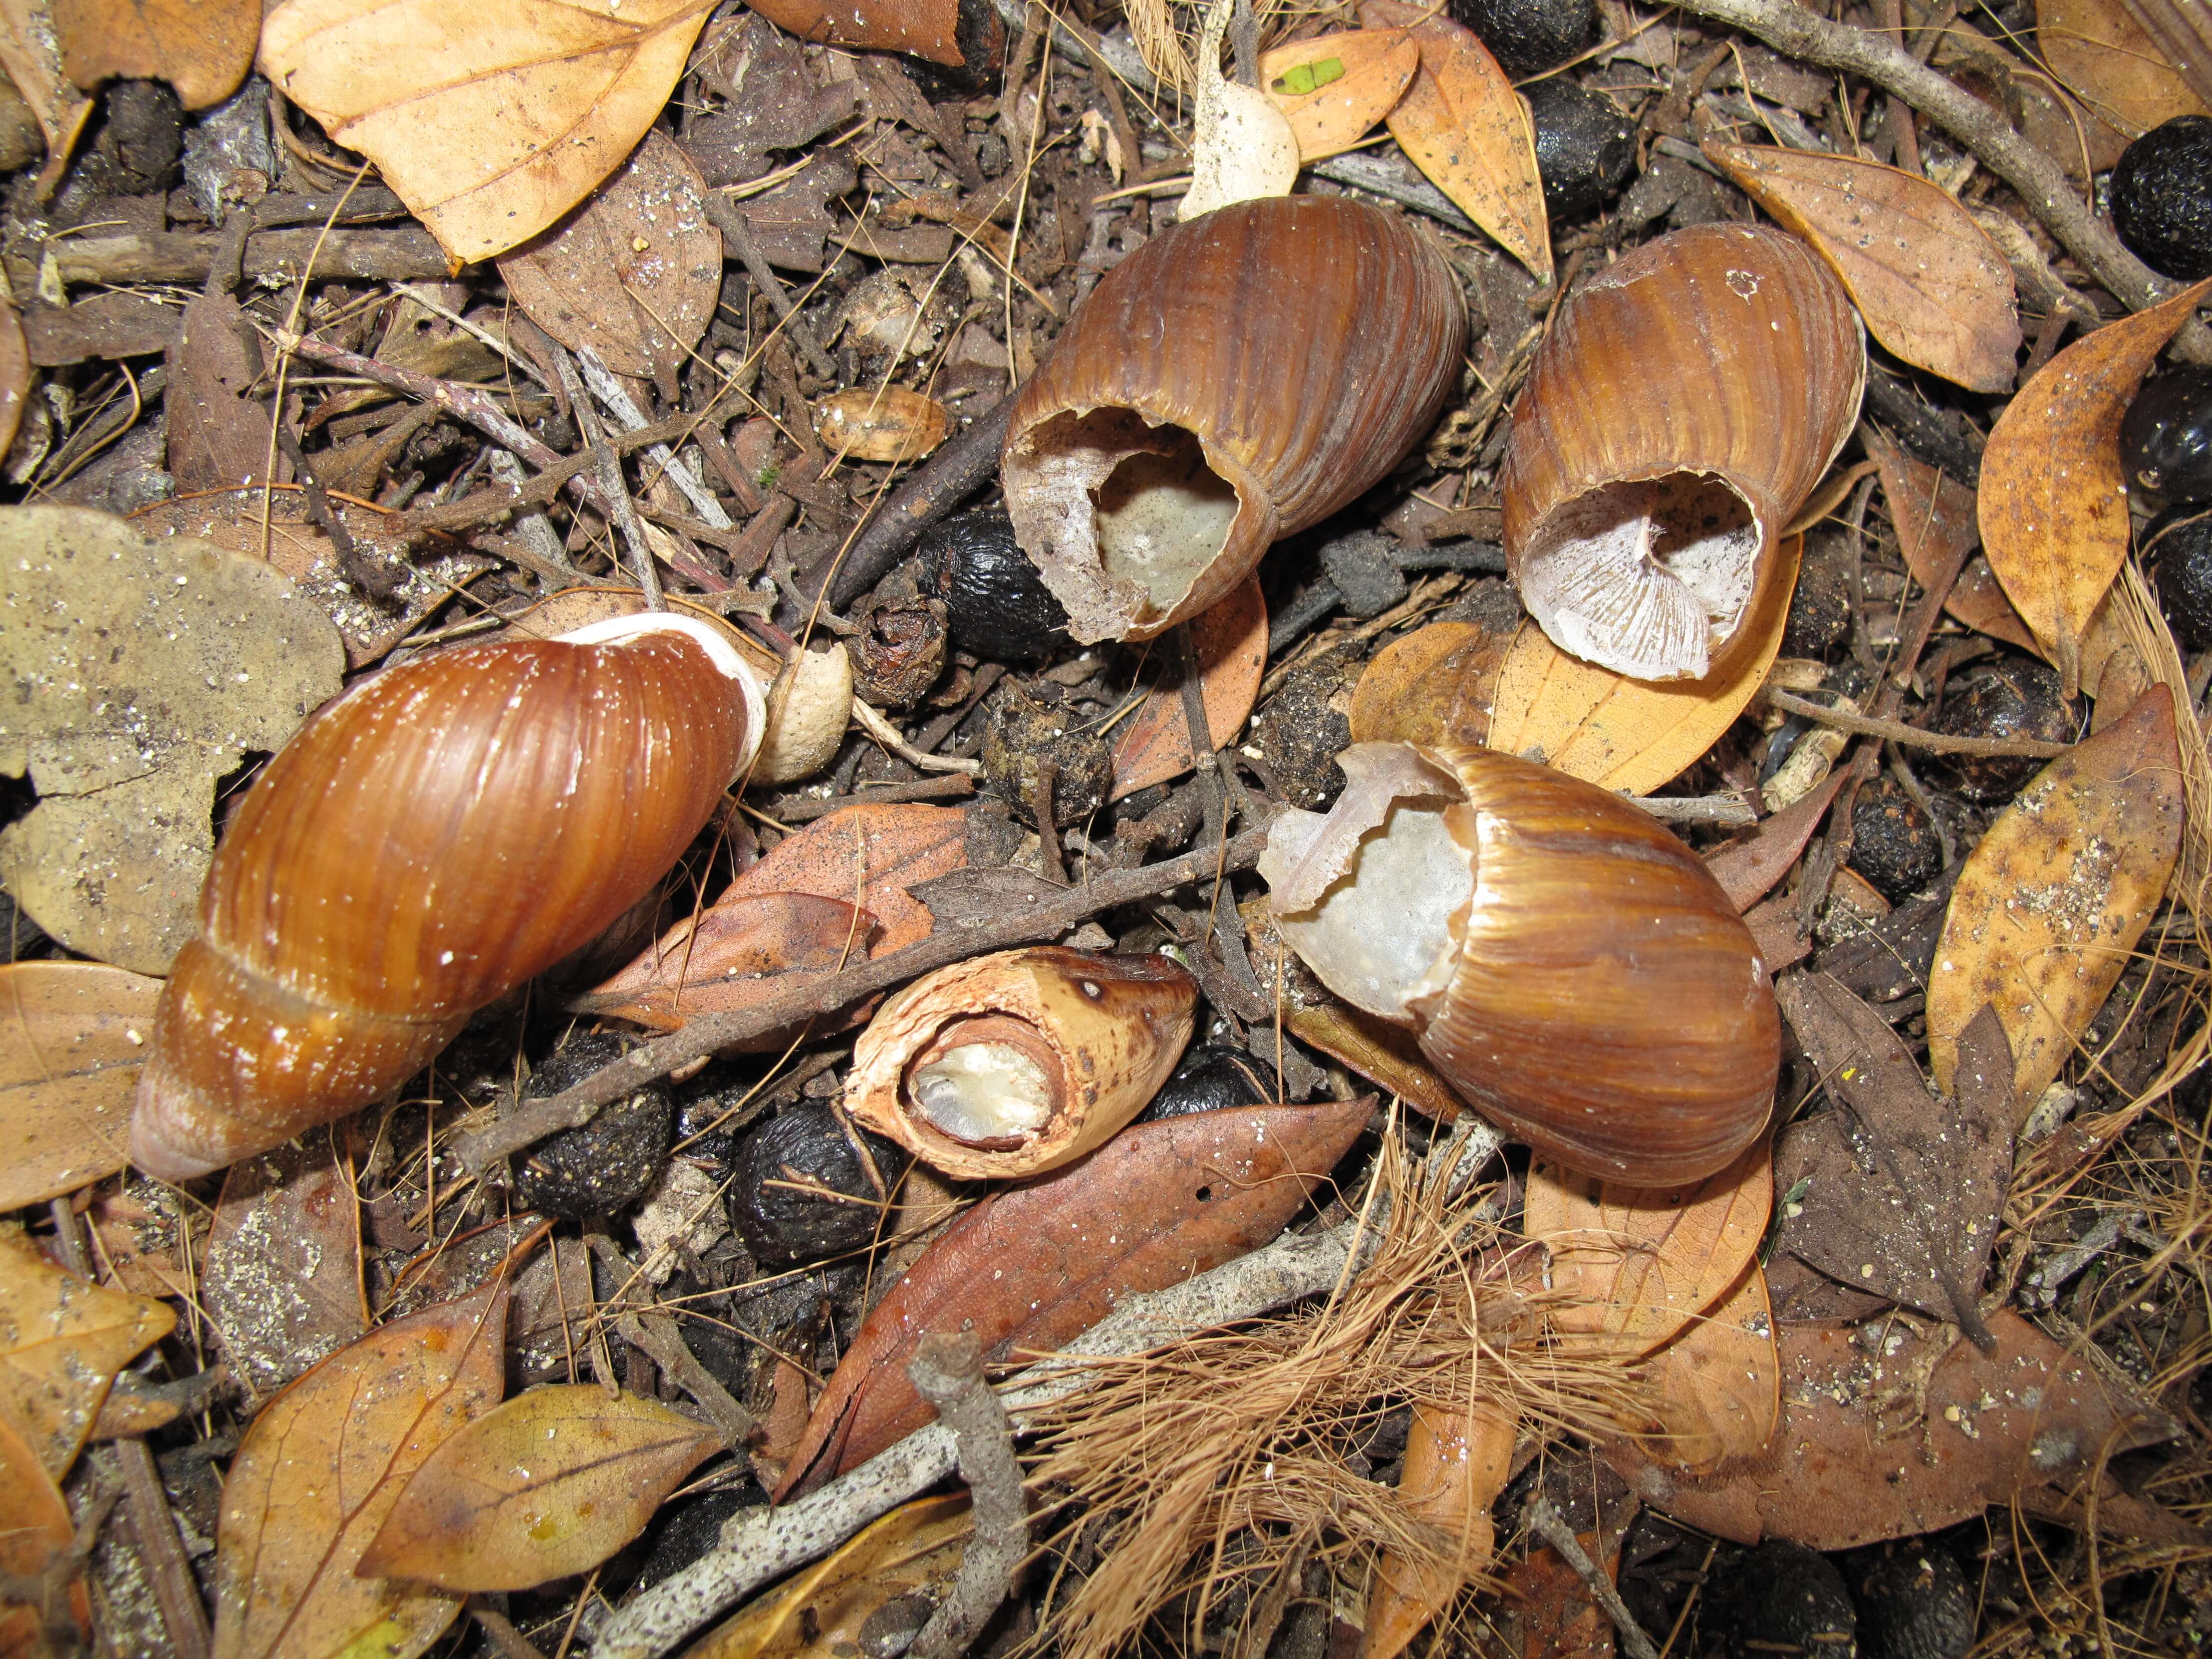 Snail shells eaten by rats